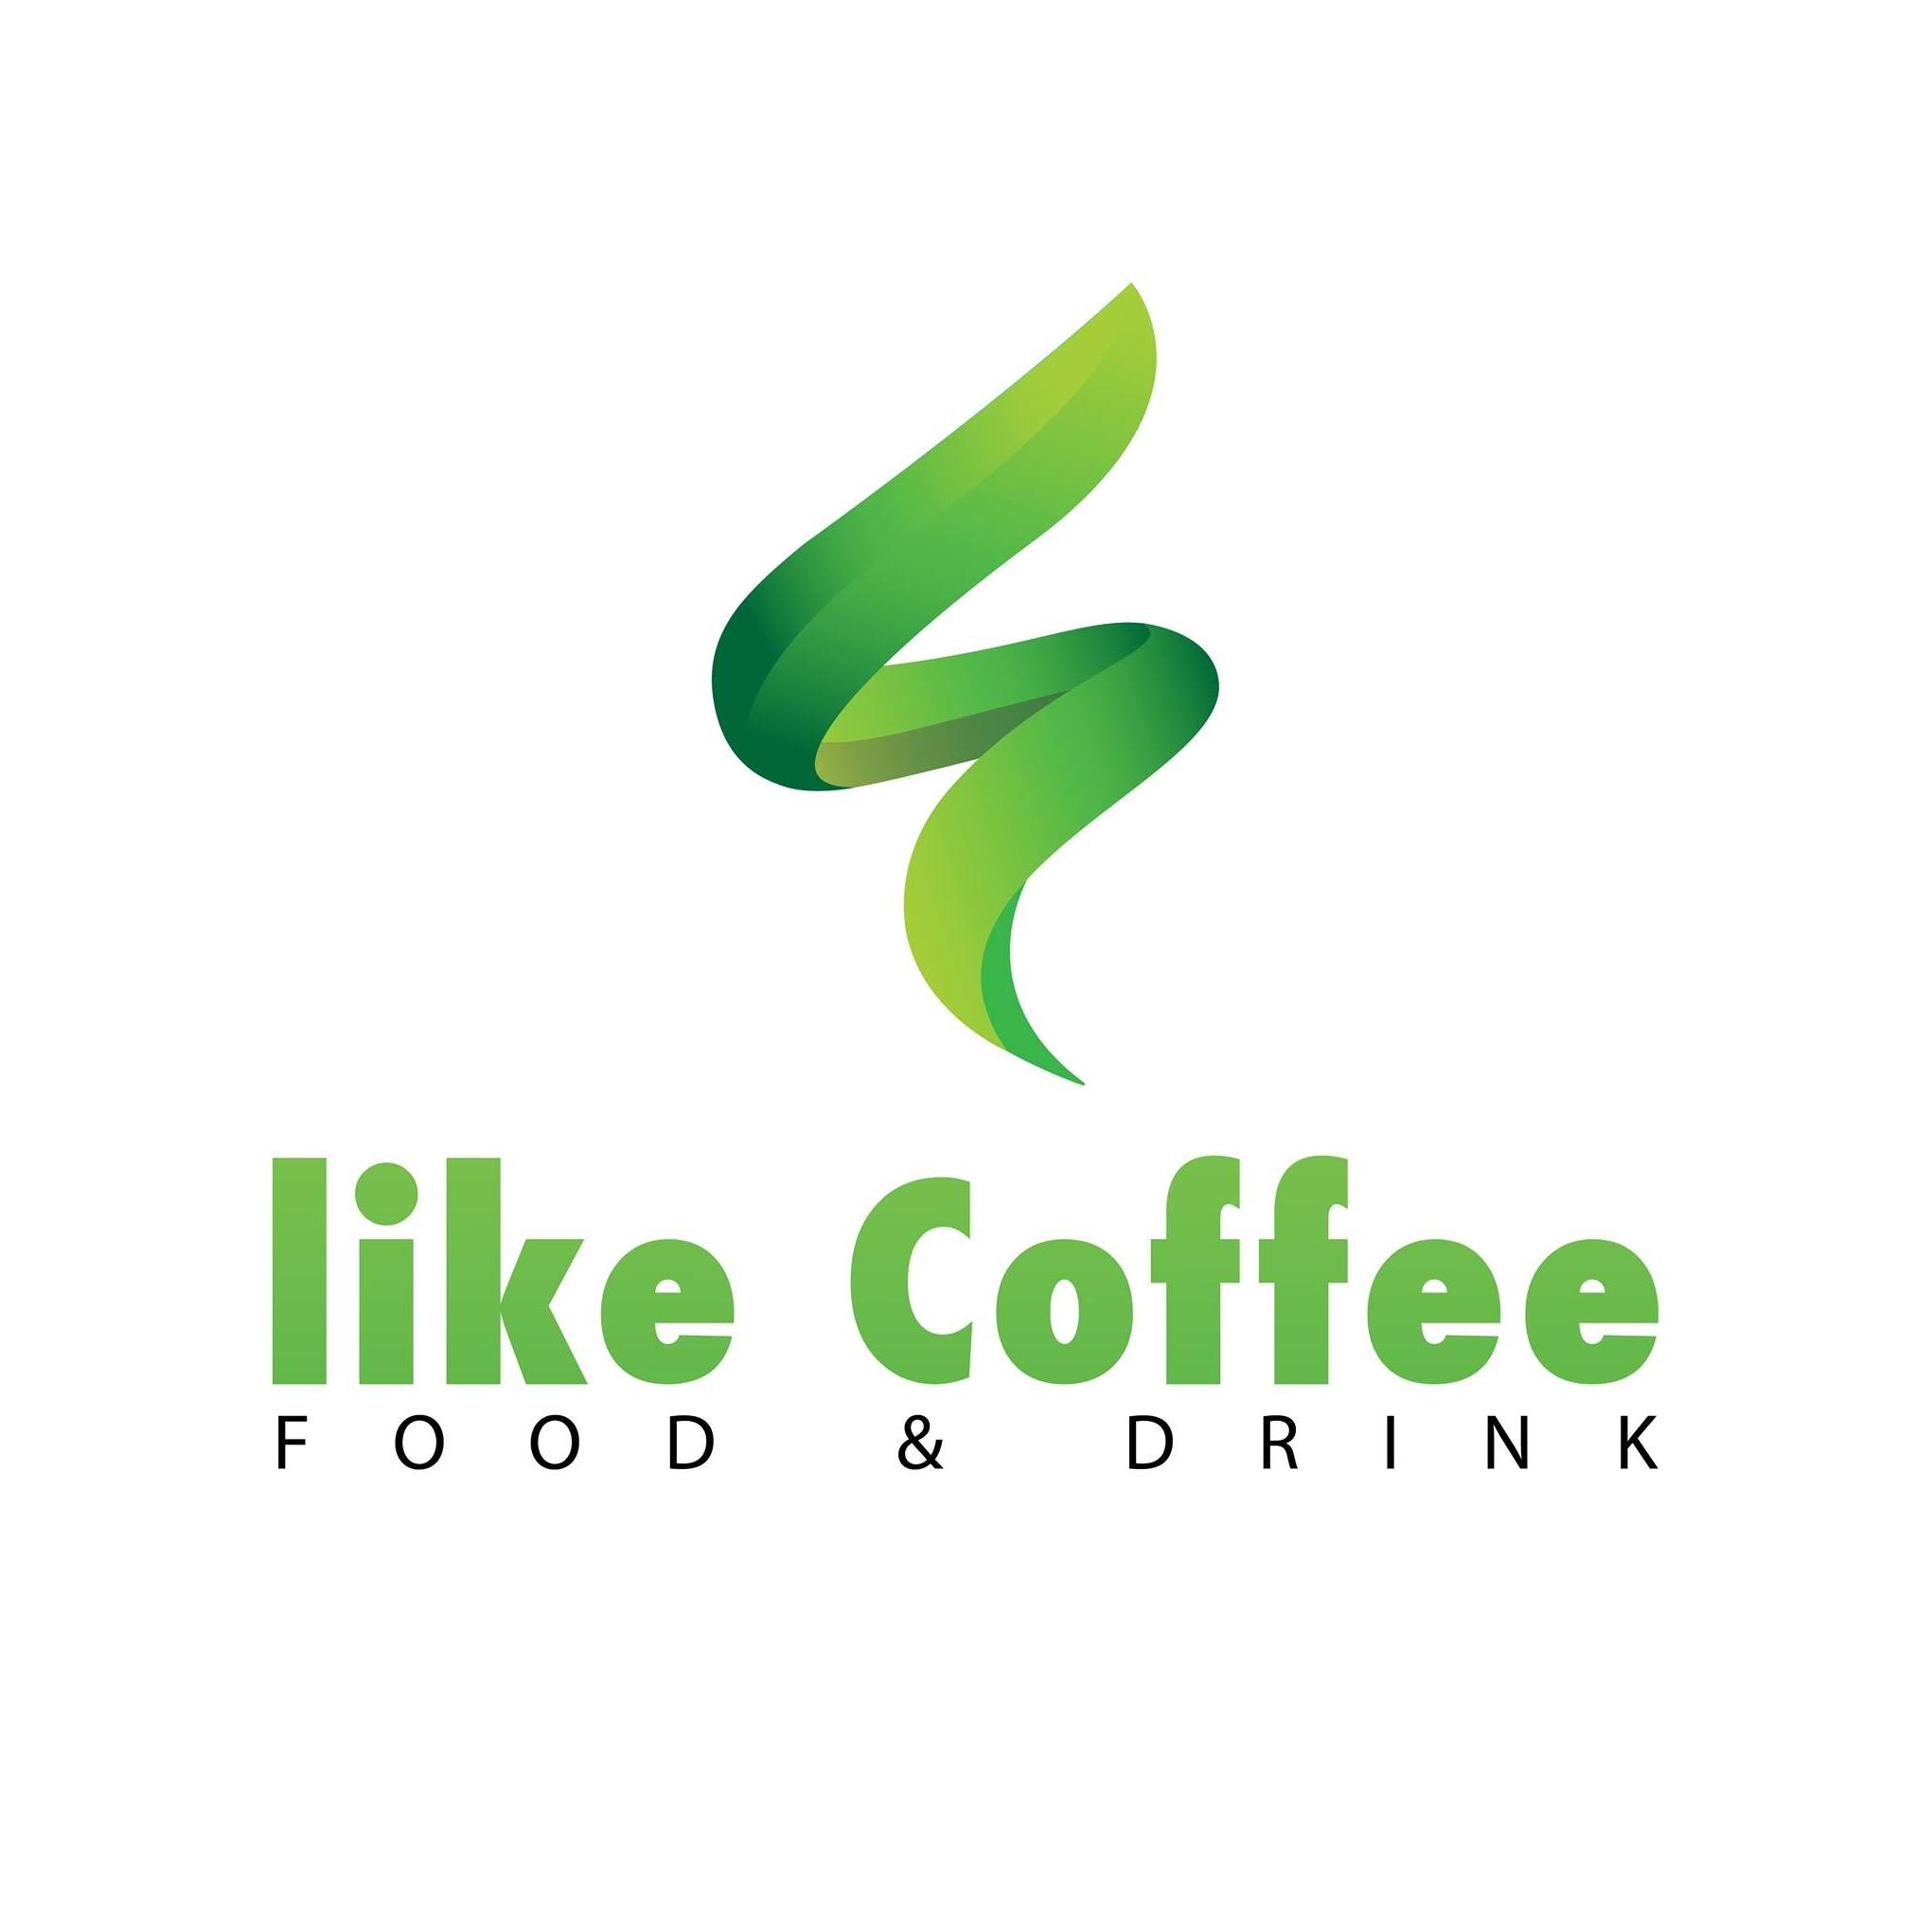 Like-coffee-food-drink